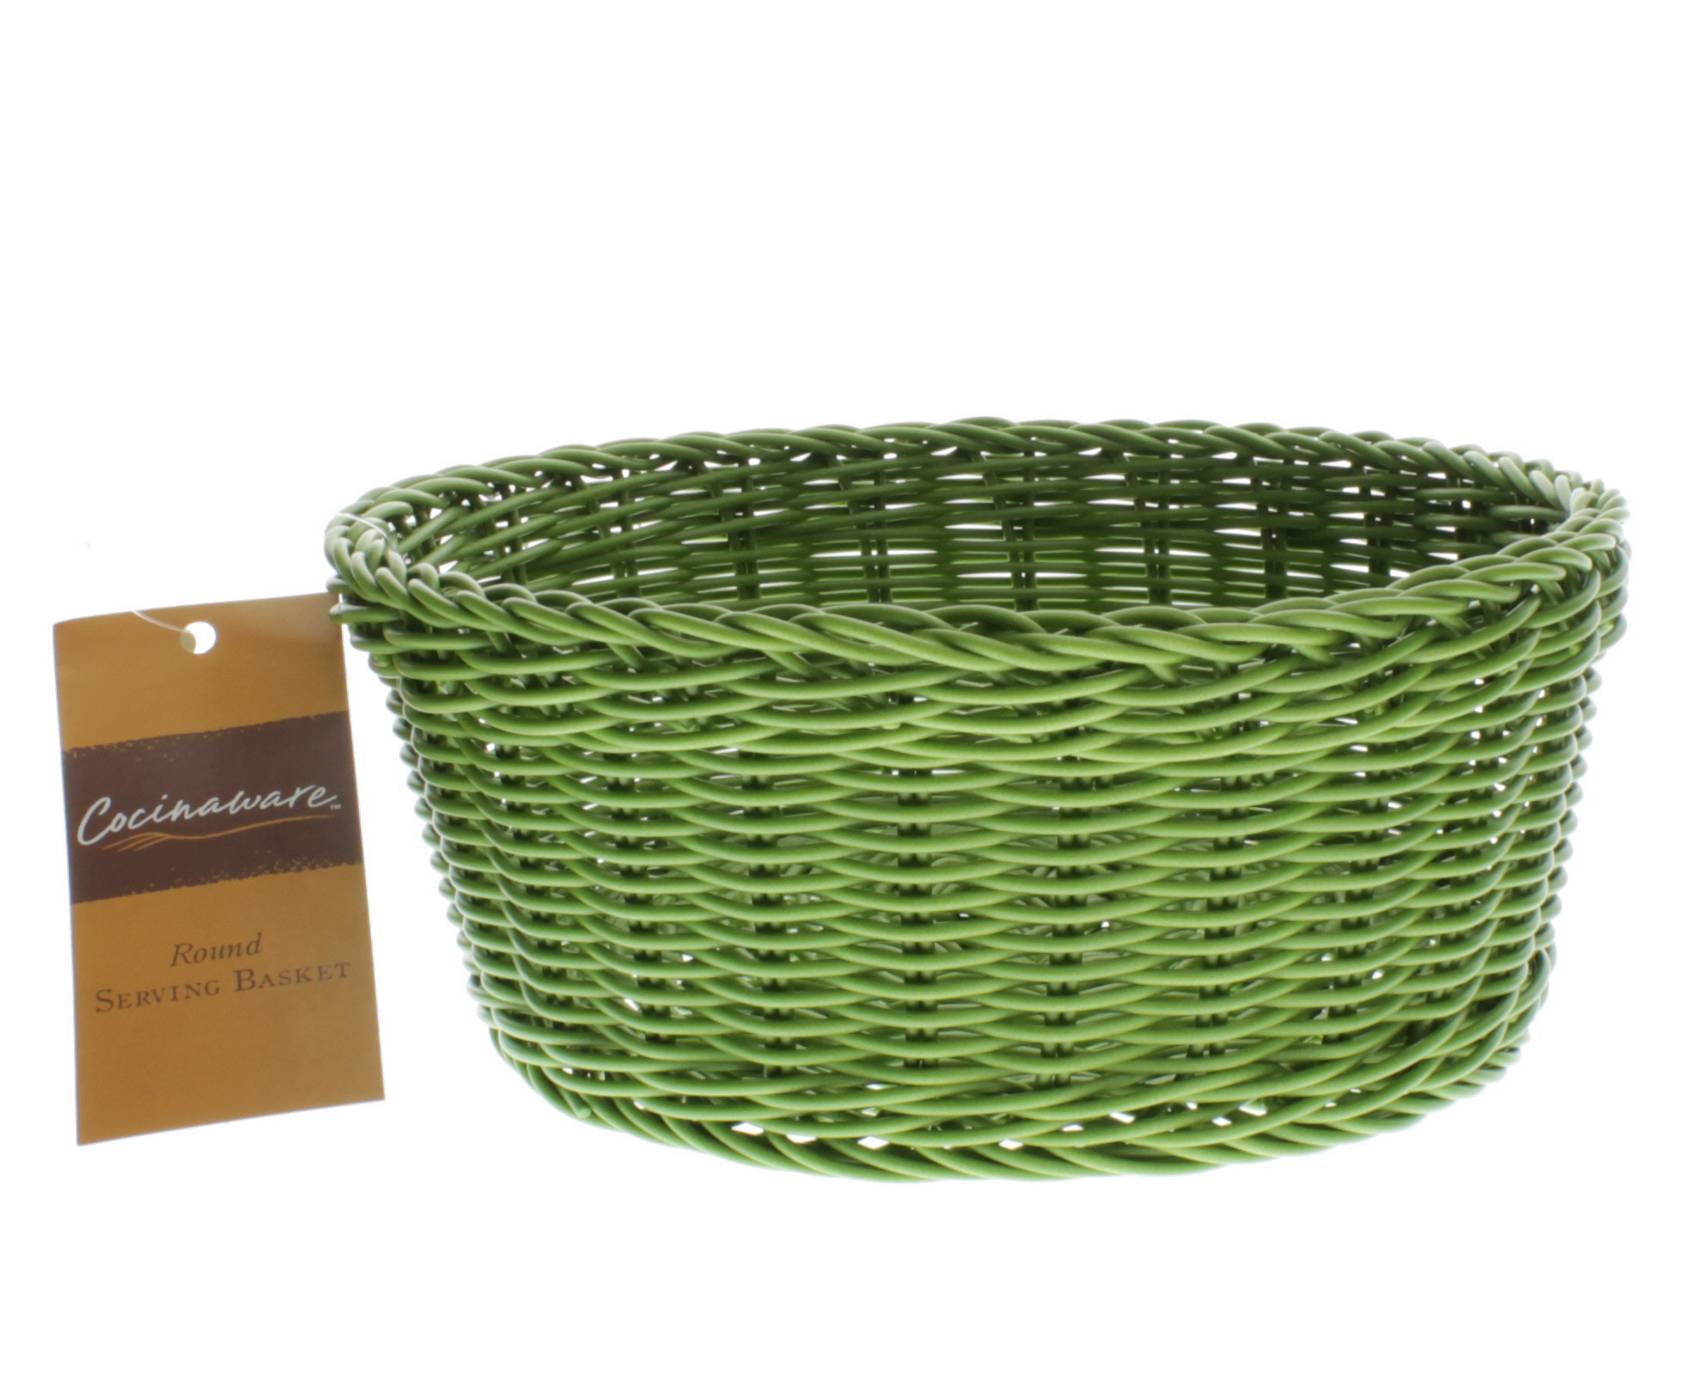 Cocinaware Round Serving Basket; image 1 of 3